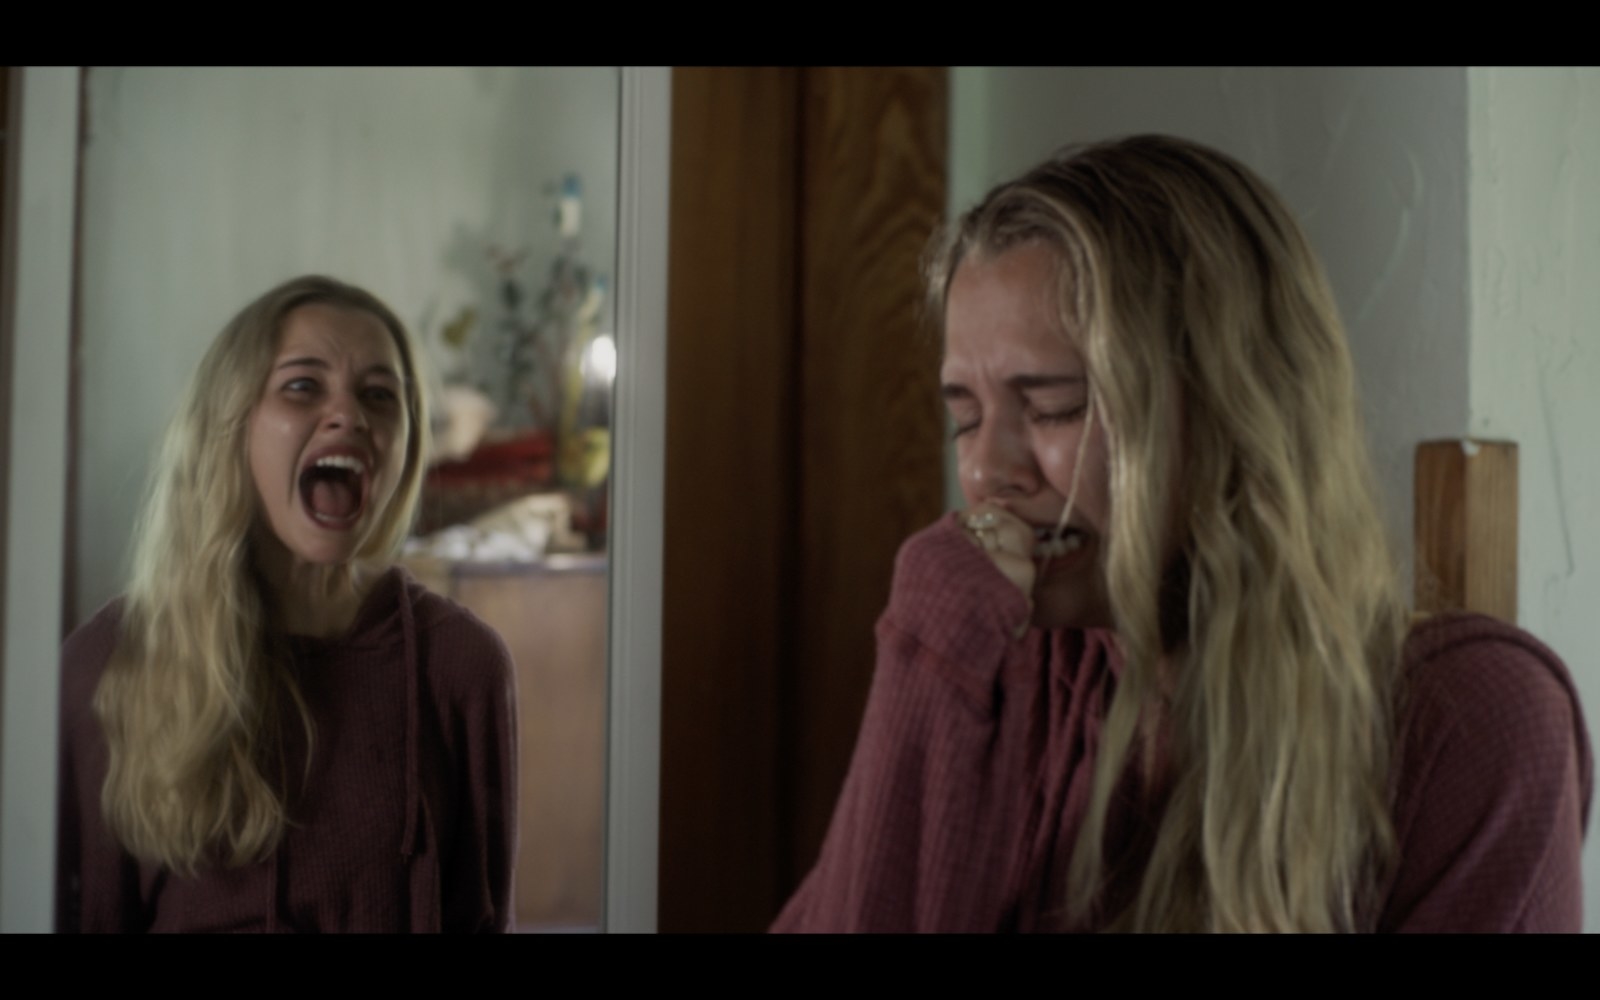 Rain (Madison Iseman) fears her mirror image, which mocks her.